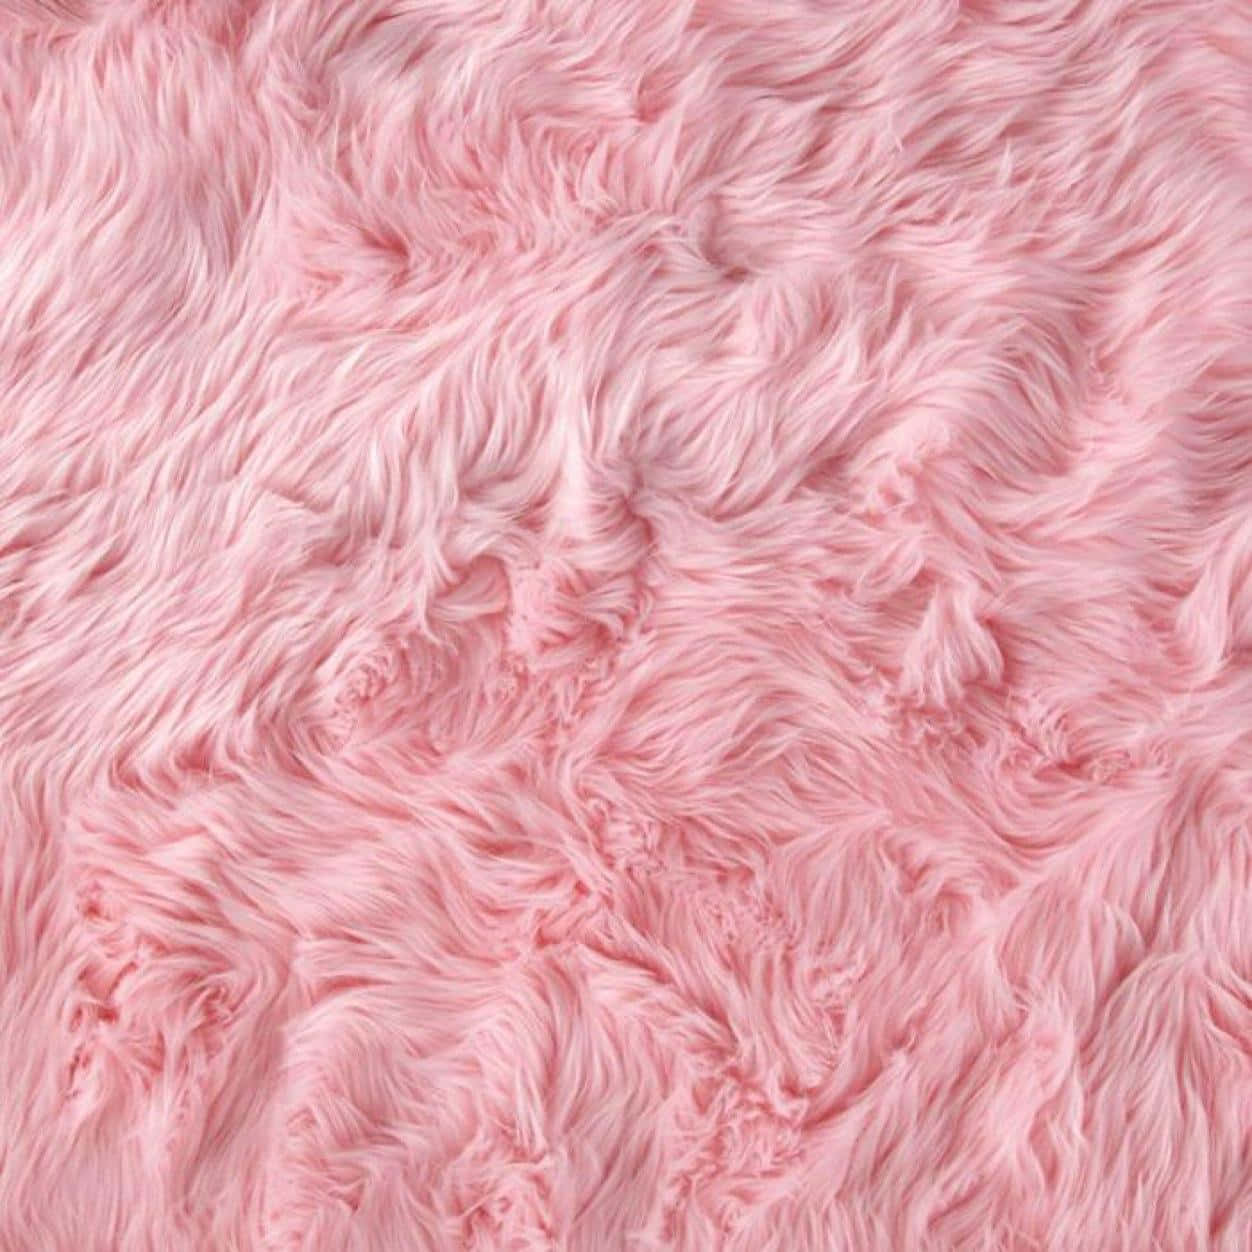 Download Fuzzy Pink Fur Coat Wallpaper | Wallpapers.com